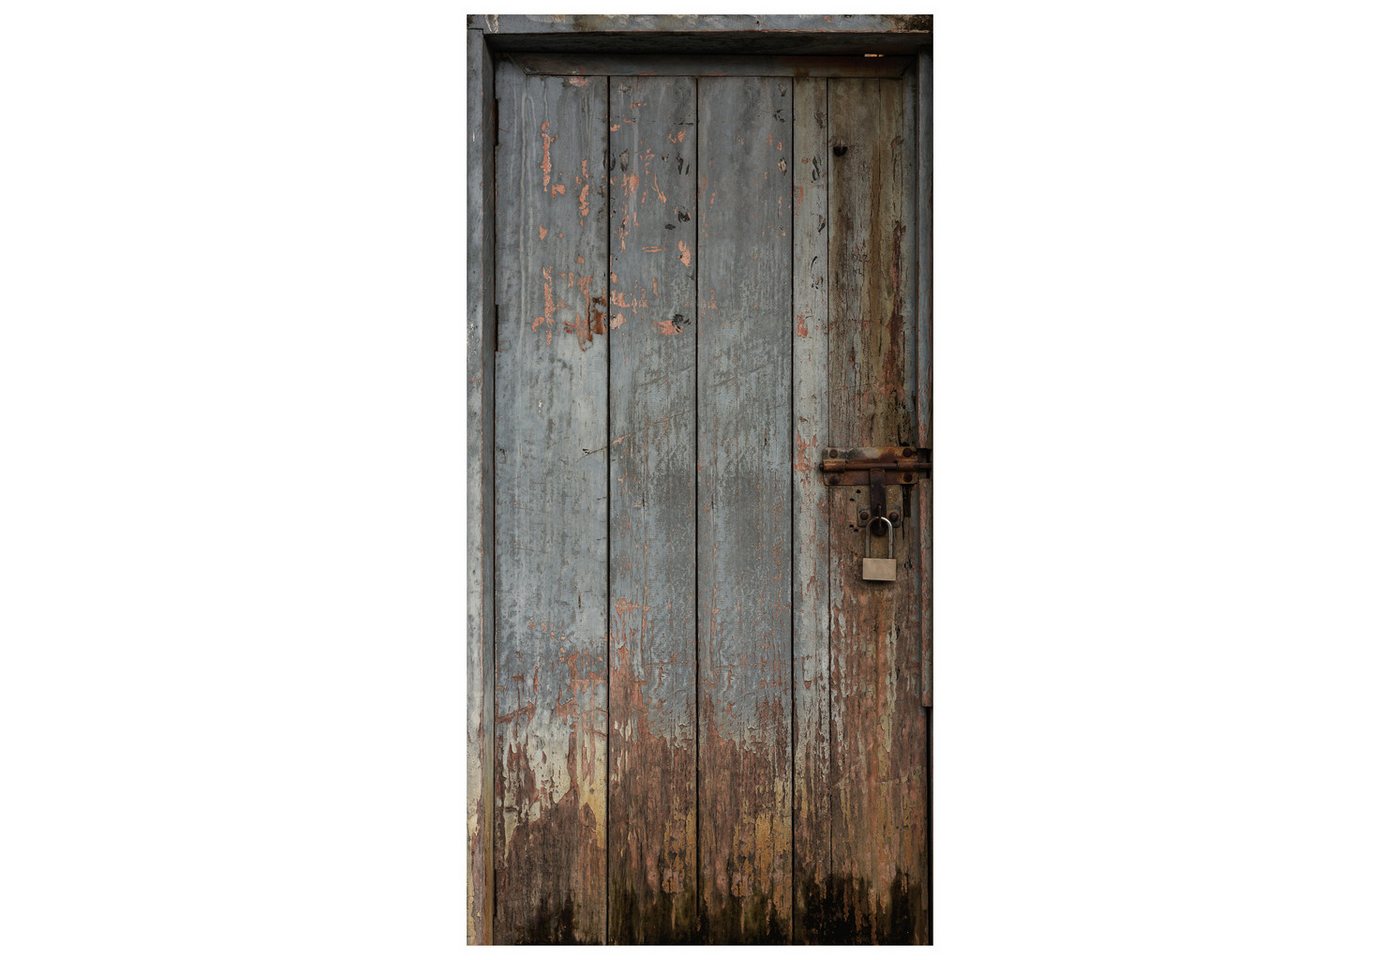 wandmotiv24 Türtapete alte Holztür mit Schloss, Grau, Farbe, glatt, Fototapete, Wandtapete, Motivtapete, matt, selbstklebende Vliestapete von wandmotiv24